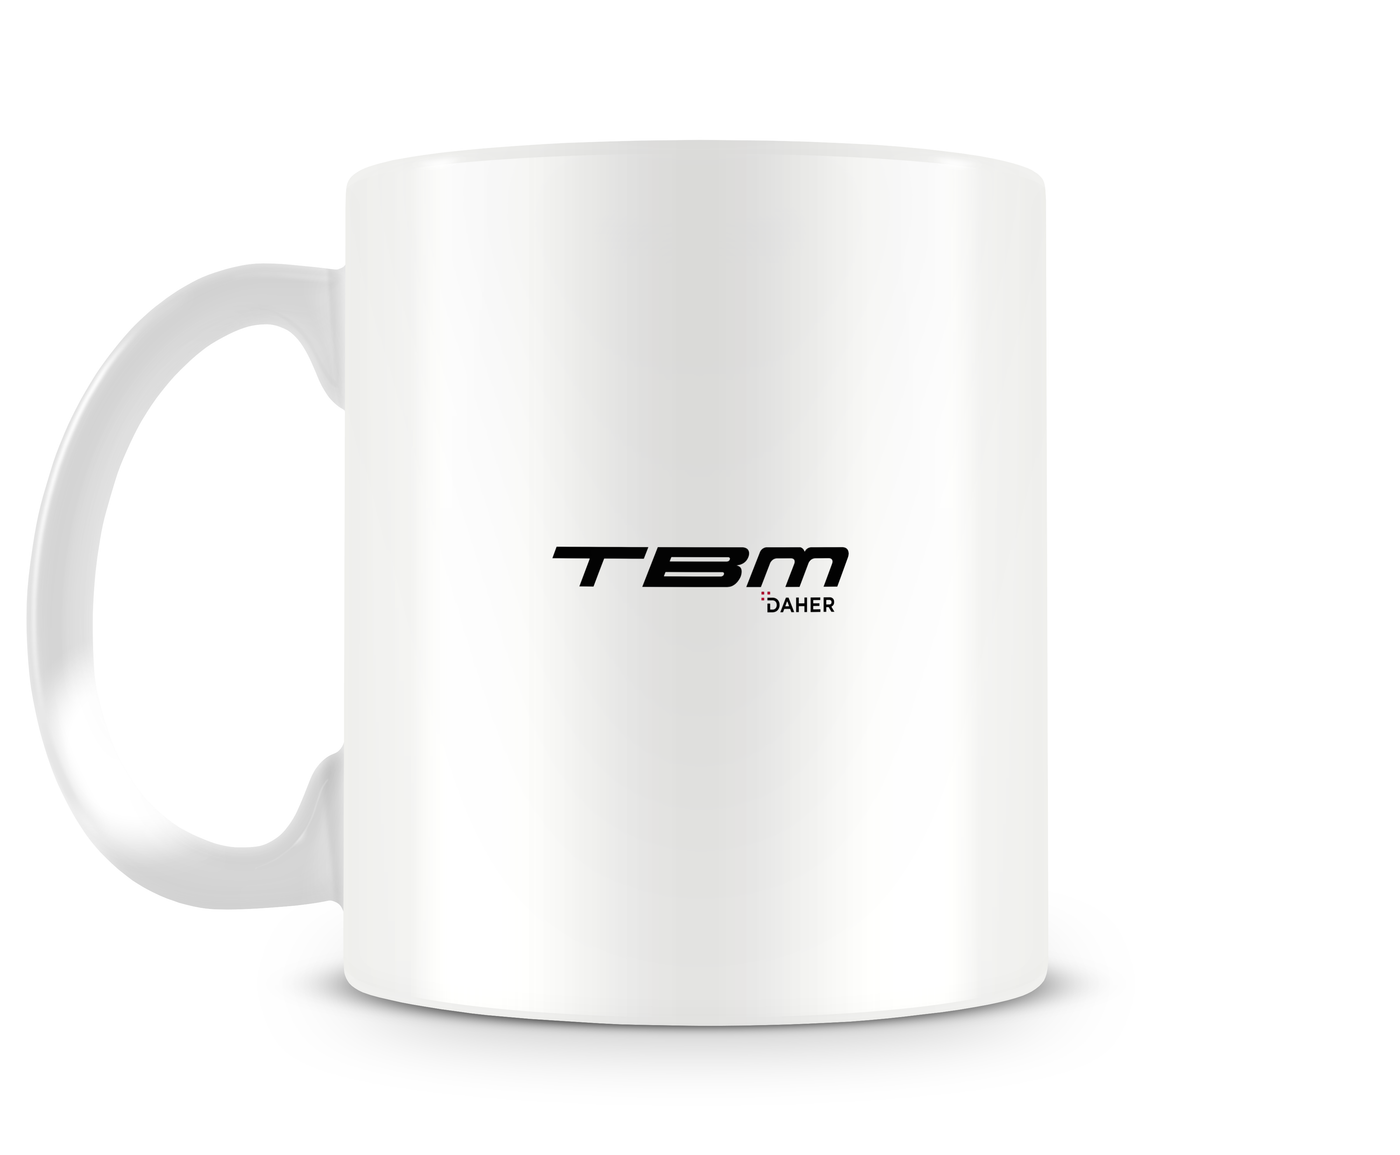 Daher TBM 900 Mug - Aircraft Mugs